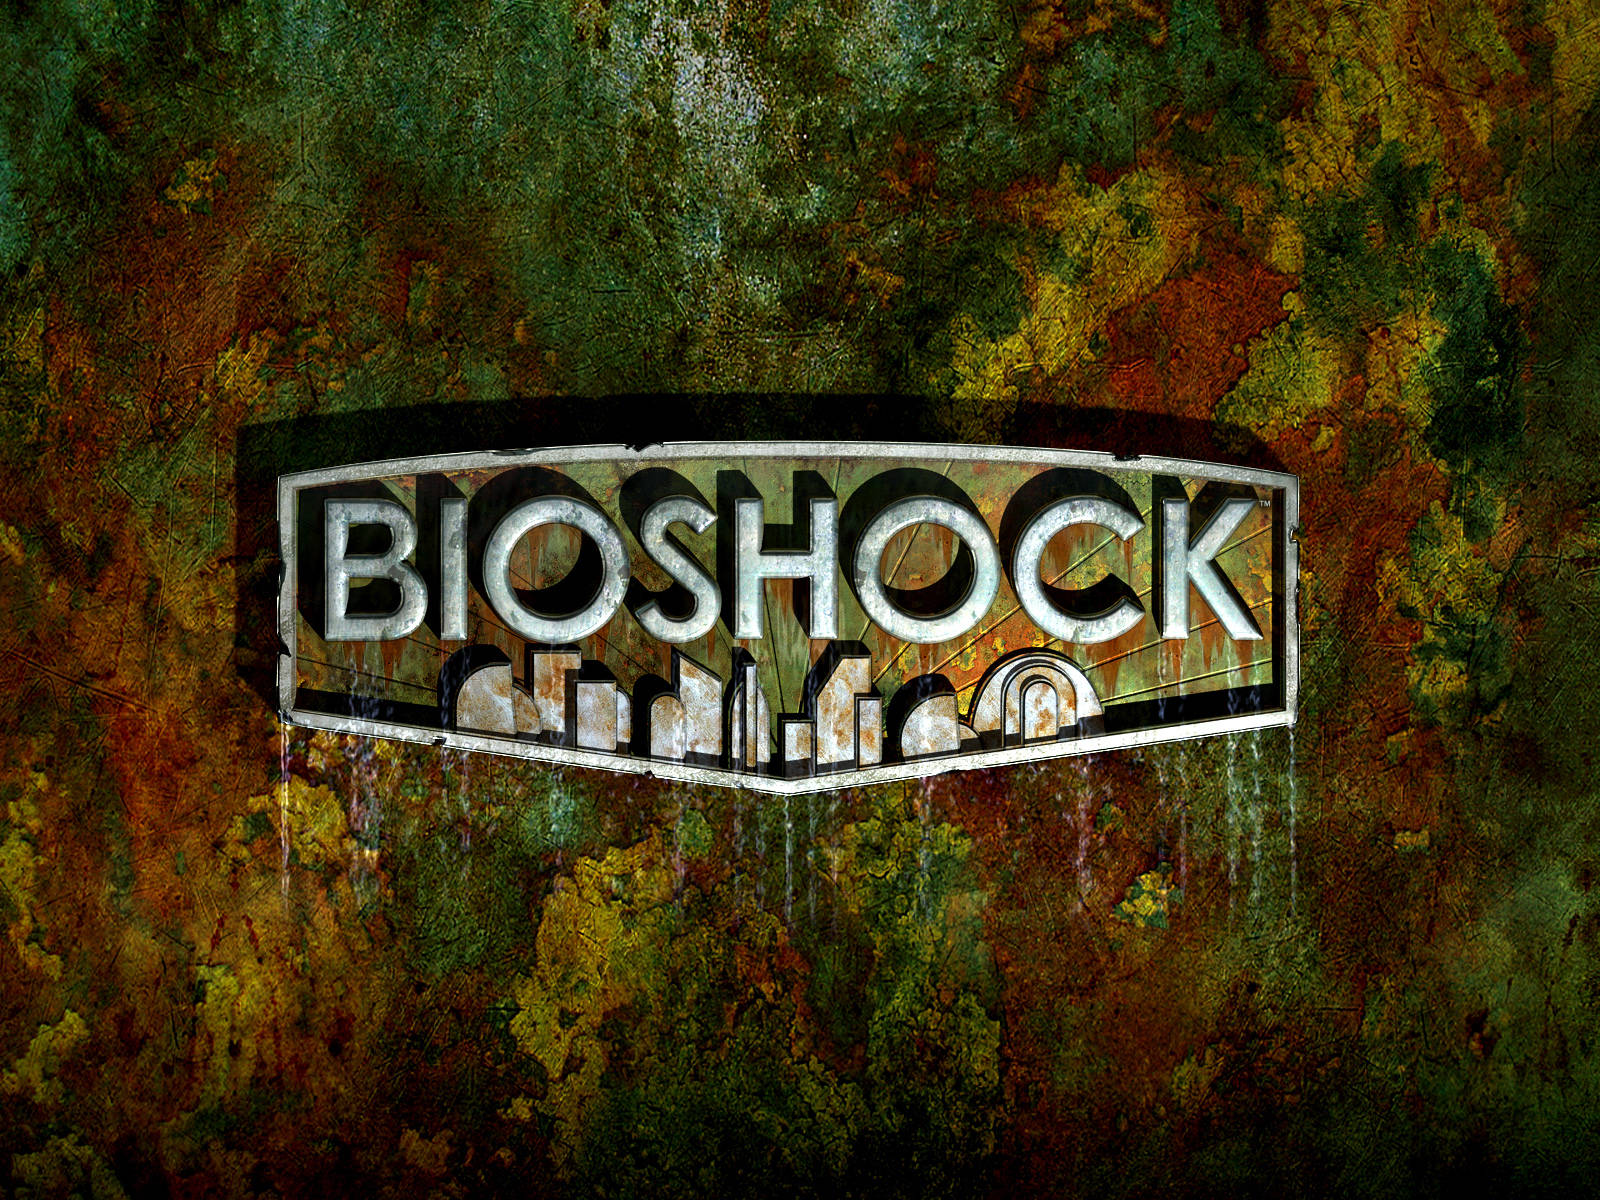 Bioshock 4k Rusted Logo Tapet: Få dette 4K-rustet logo tapet for at fremkalde en visuel og rustik stemning. Wallpaper